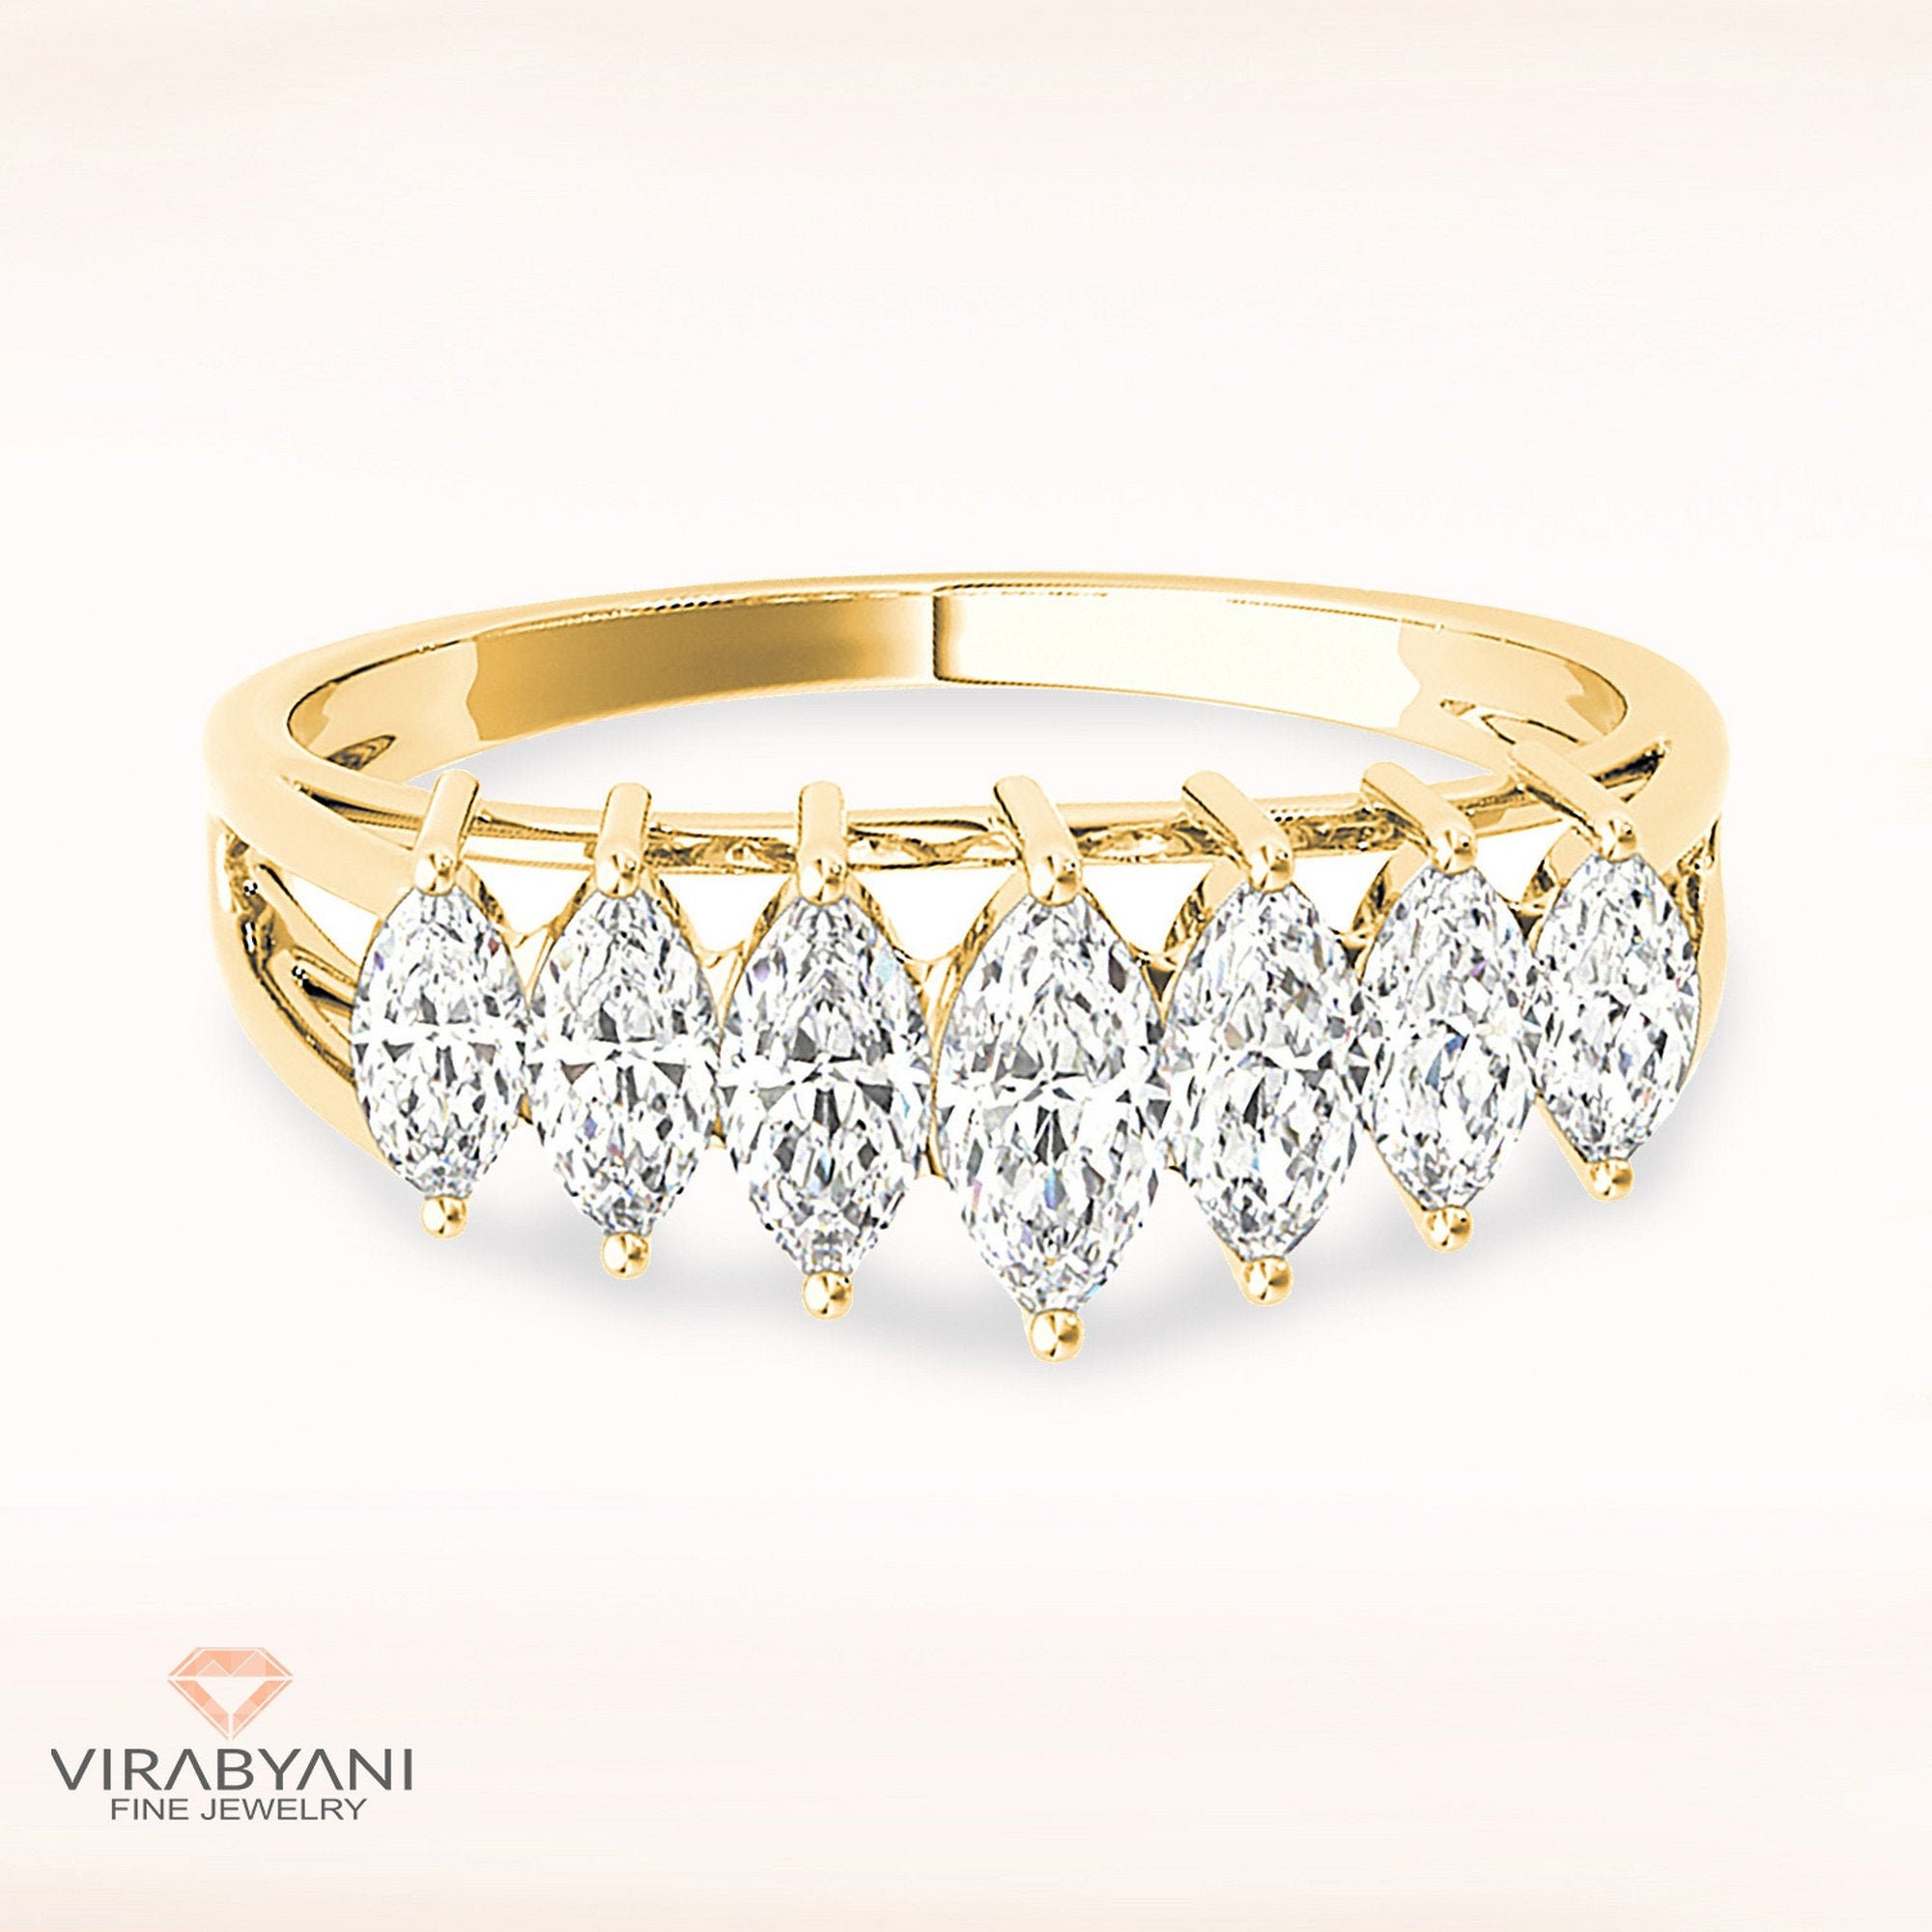 1.40 Ctw Marquise Cut Diamond Wedding Band - 14K/18K Solid Yellow Gold | Prong Set Anniversary Ring Modern Design